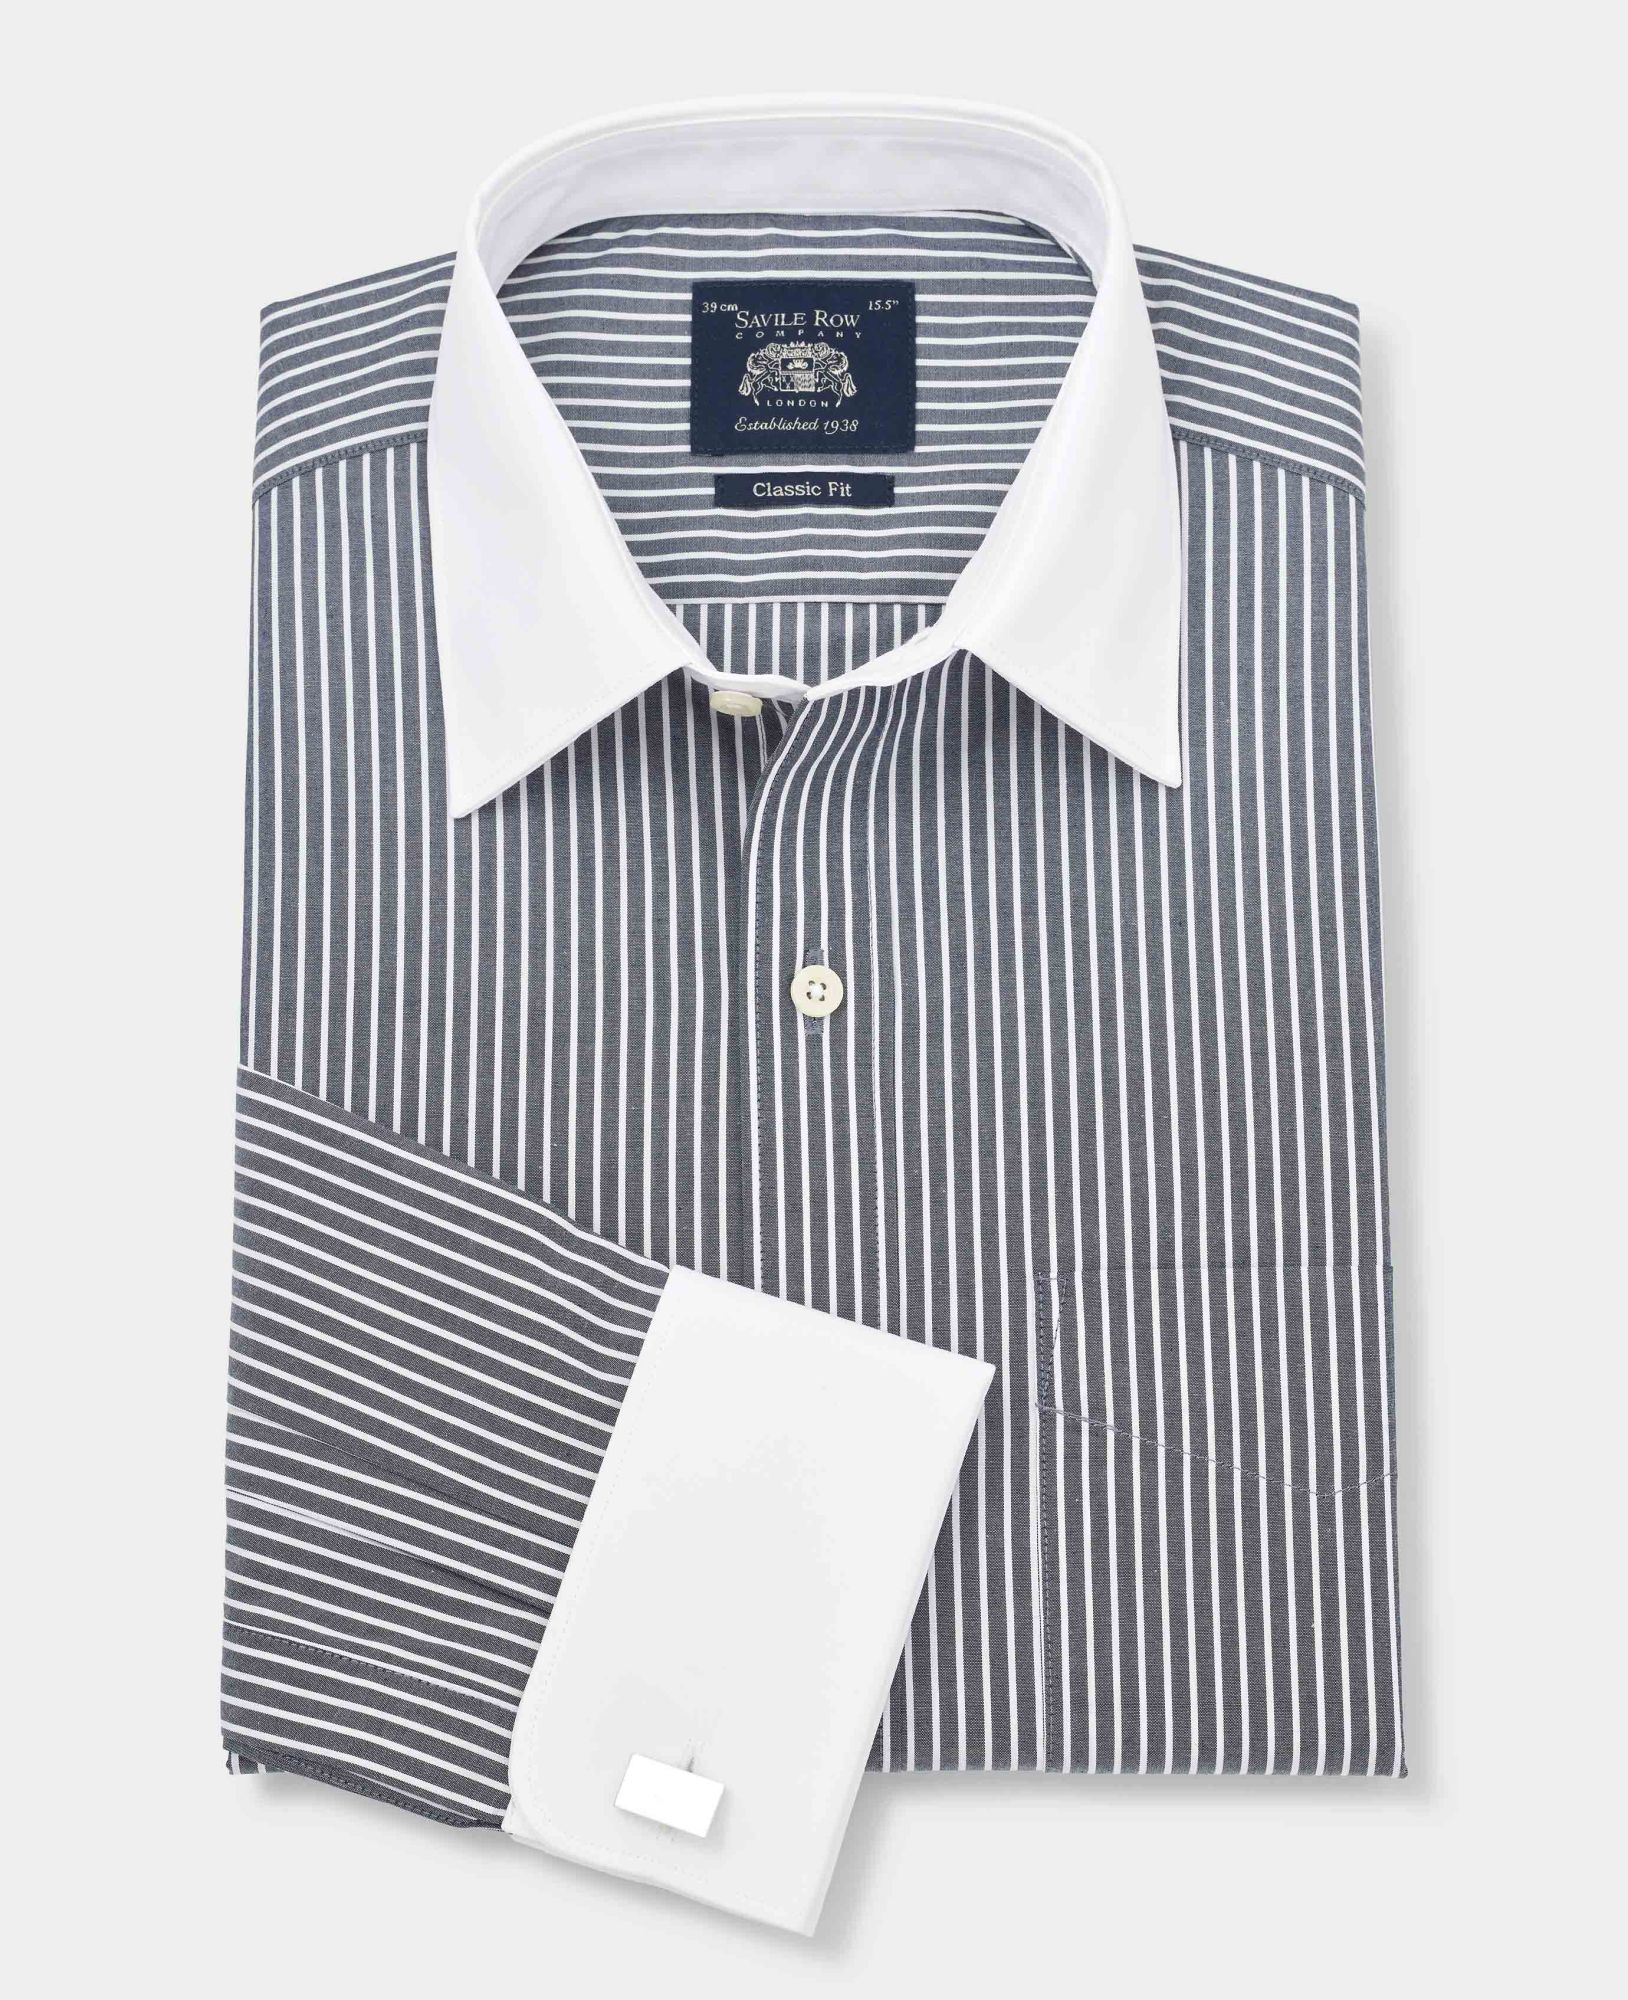 Black White Stripe Classic Fit Shirt With White Collar & Cuffs - Double Cuff 16